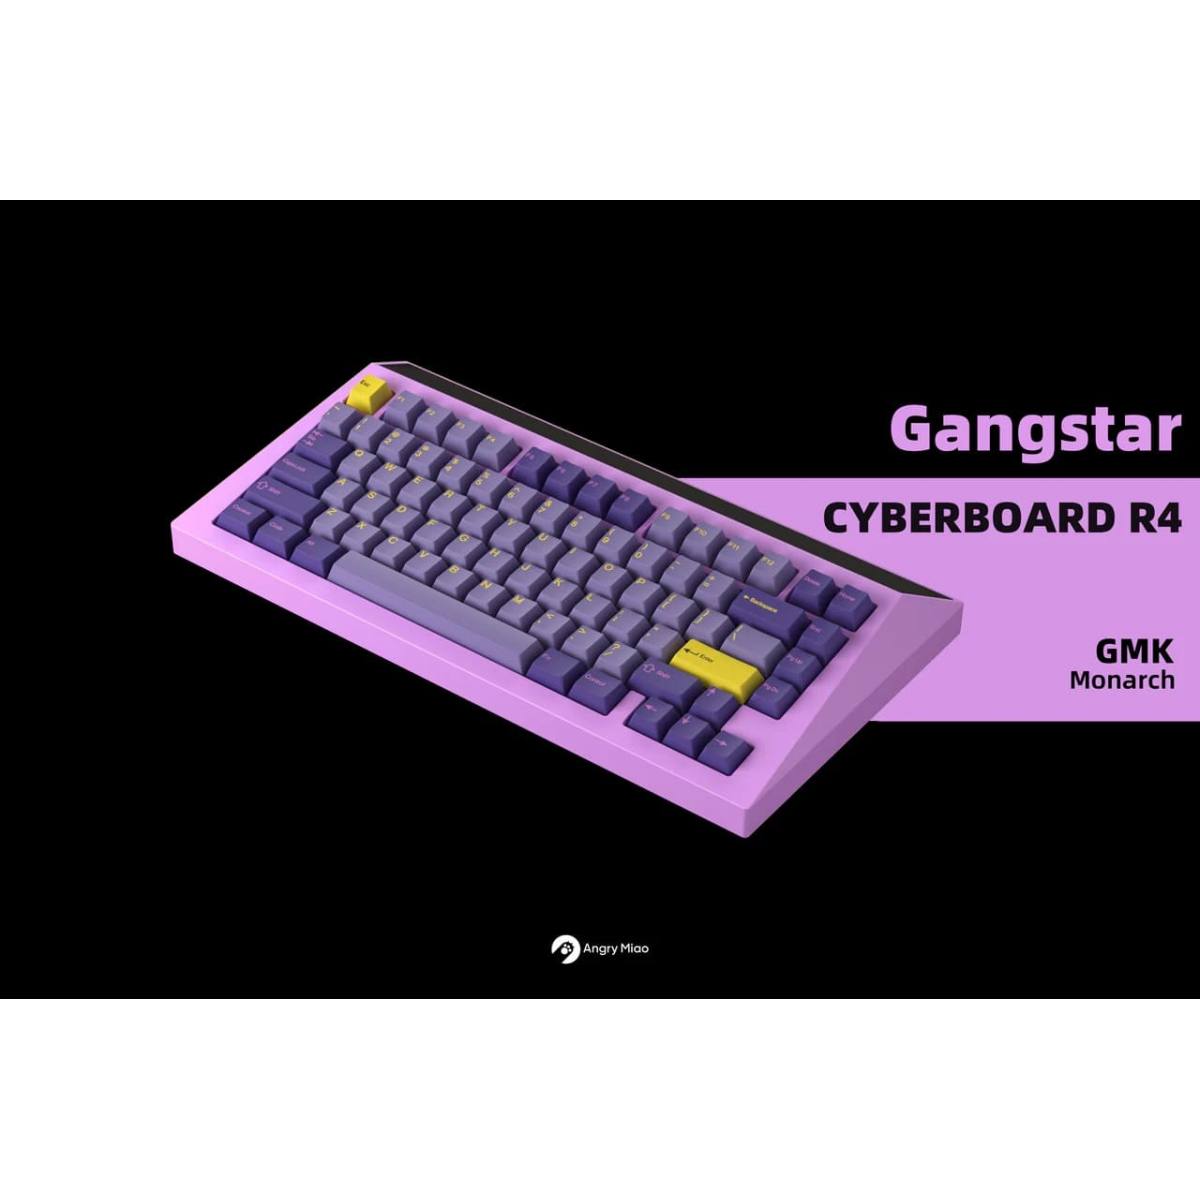 Base KIT Angry Miao Cyberboard R4 Gangstar